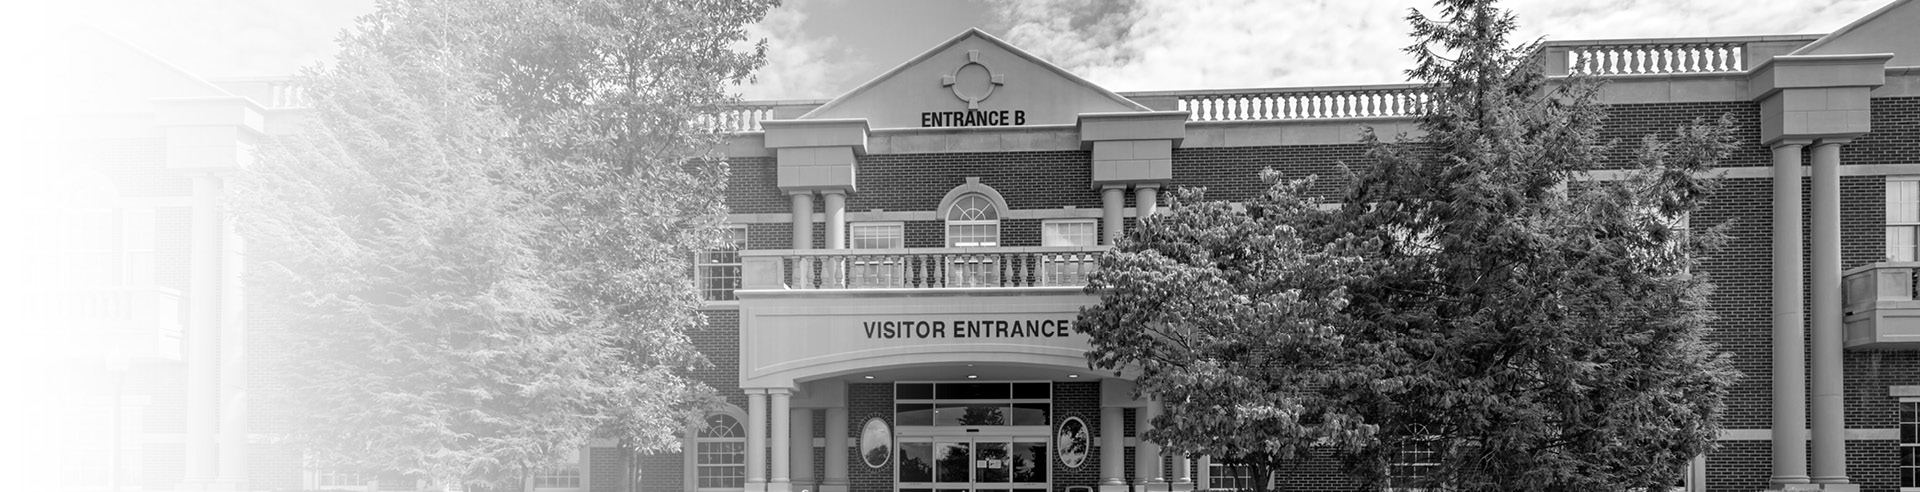 Vintage photo of Cardinal Hill Rehabilitation Hospital's visitor entrance